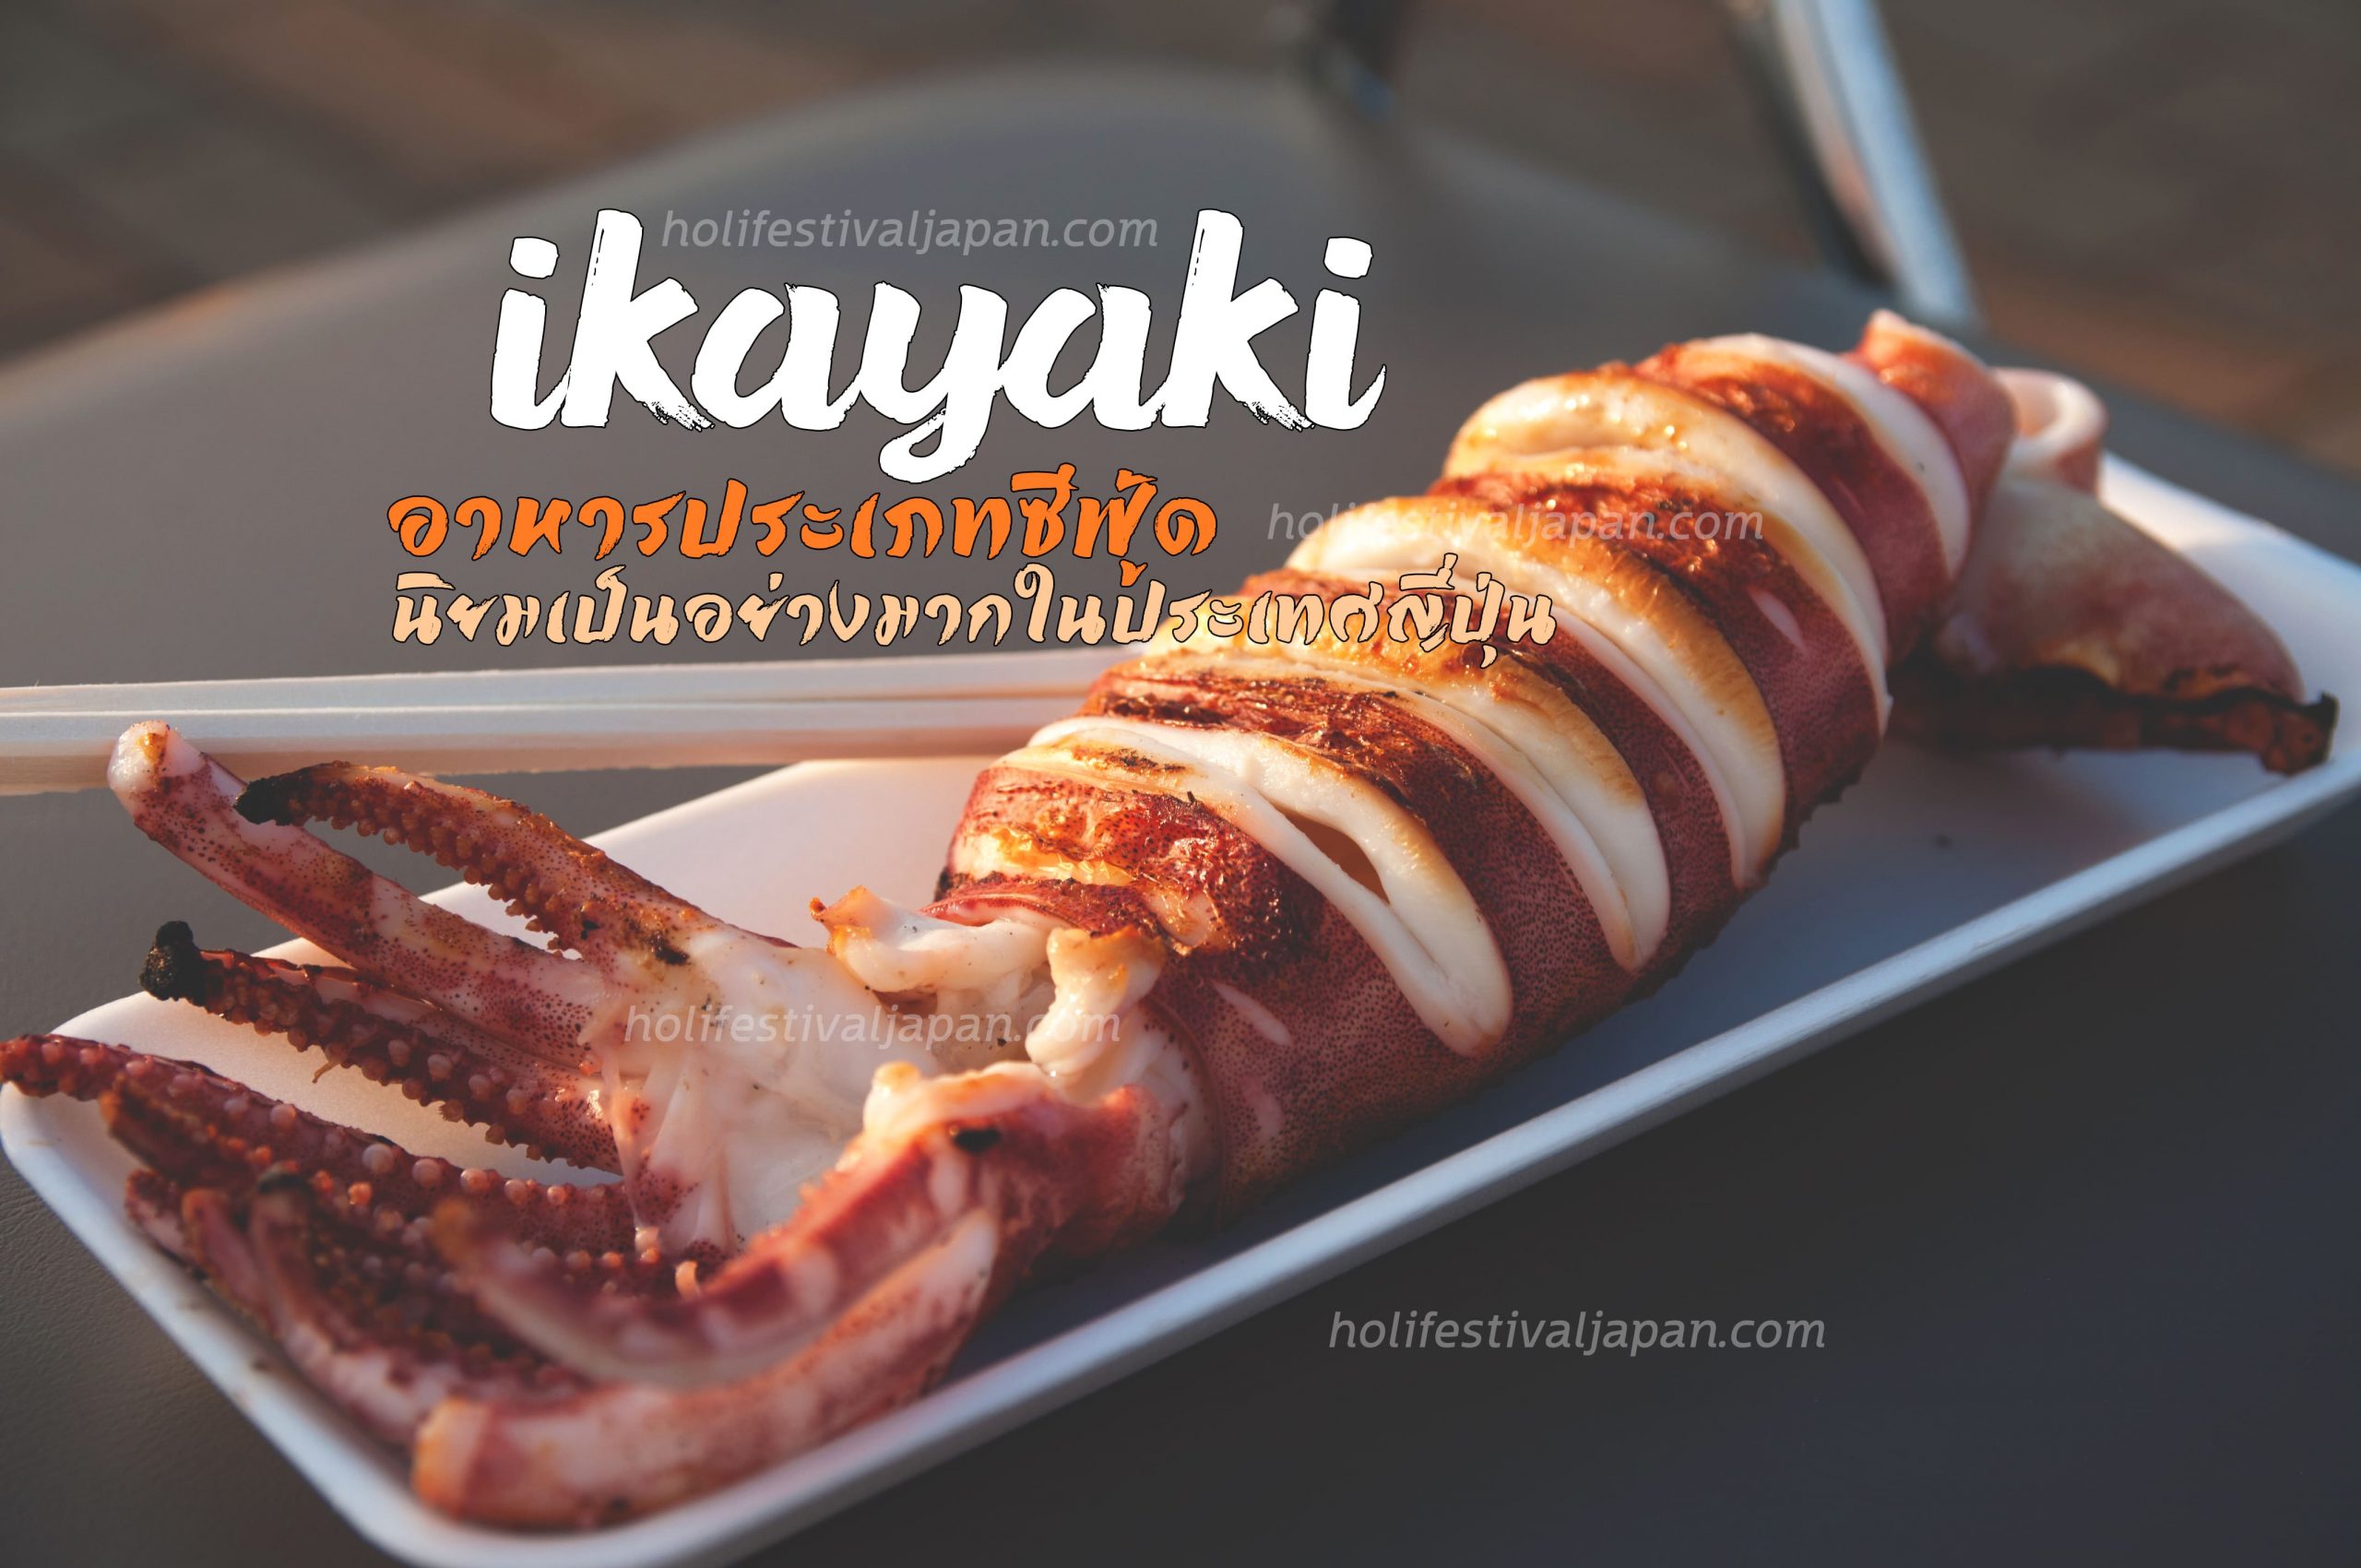 Ikayaki ปลาหมึกตัวโต ๆ ที่มีความอร่อย และสดเนื้อเด้ง